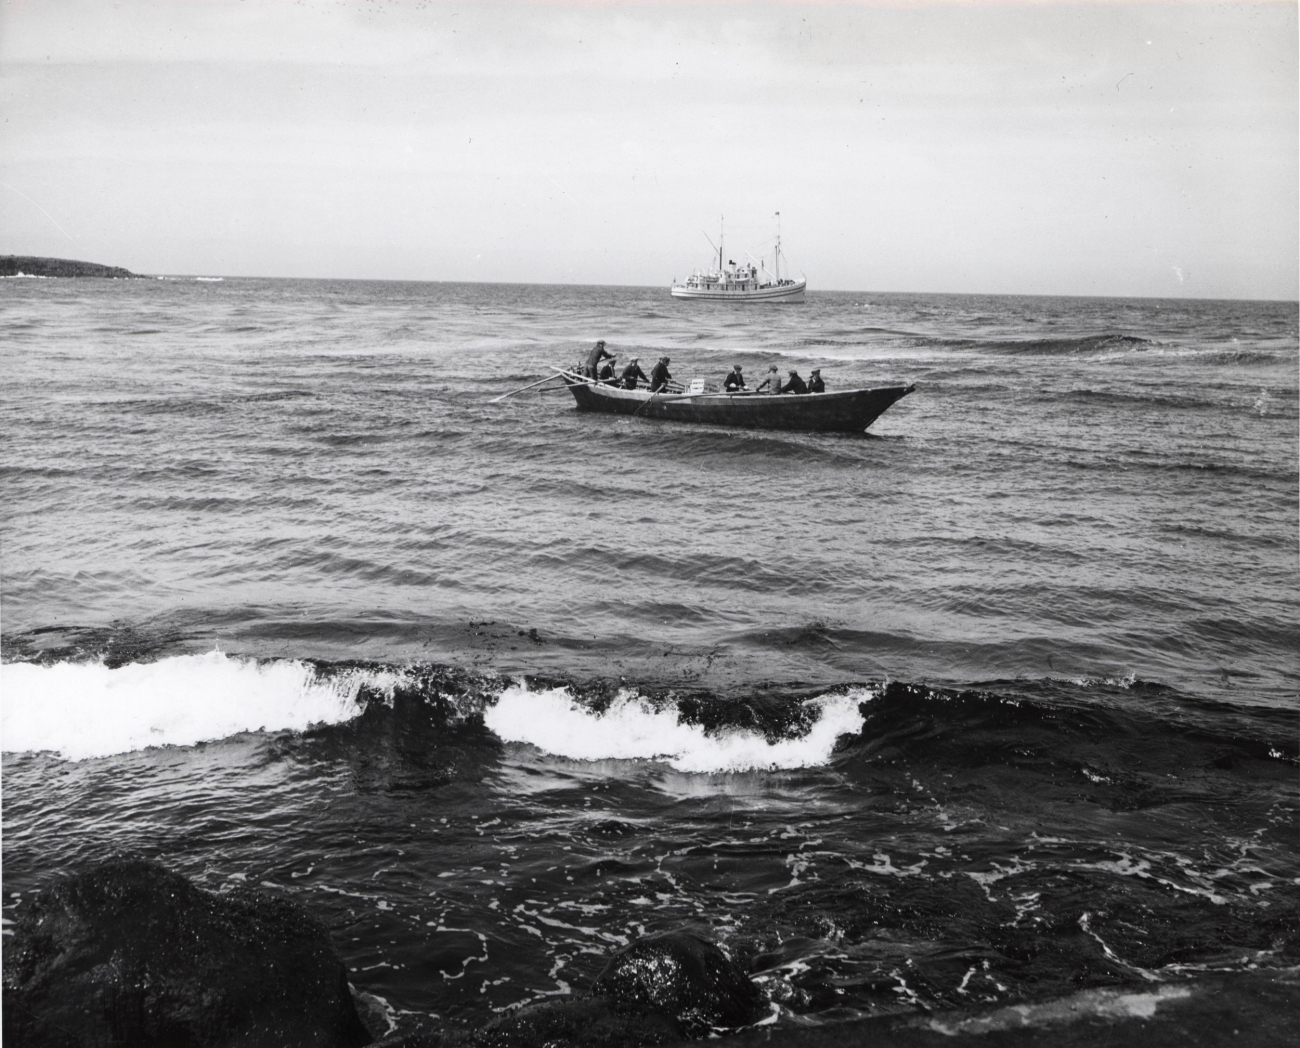 A bidarrah, a large Eskimo skin-covered boat, ferrying supplies from U